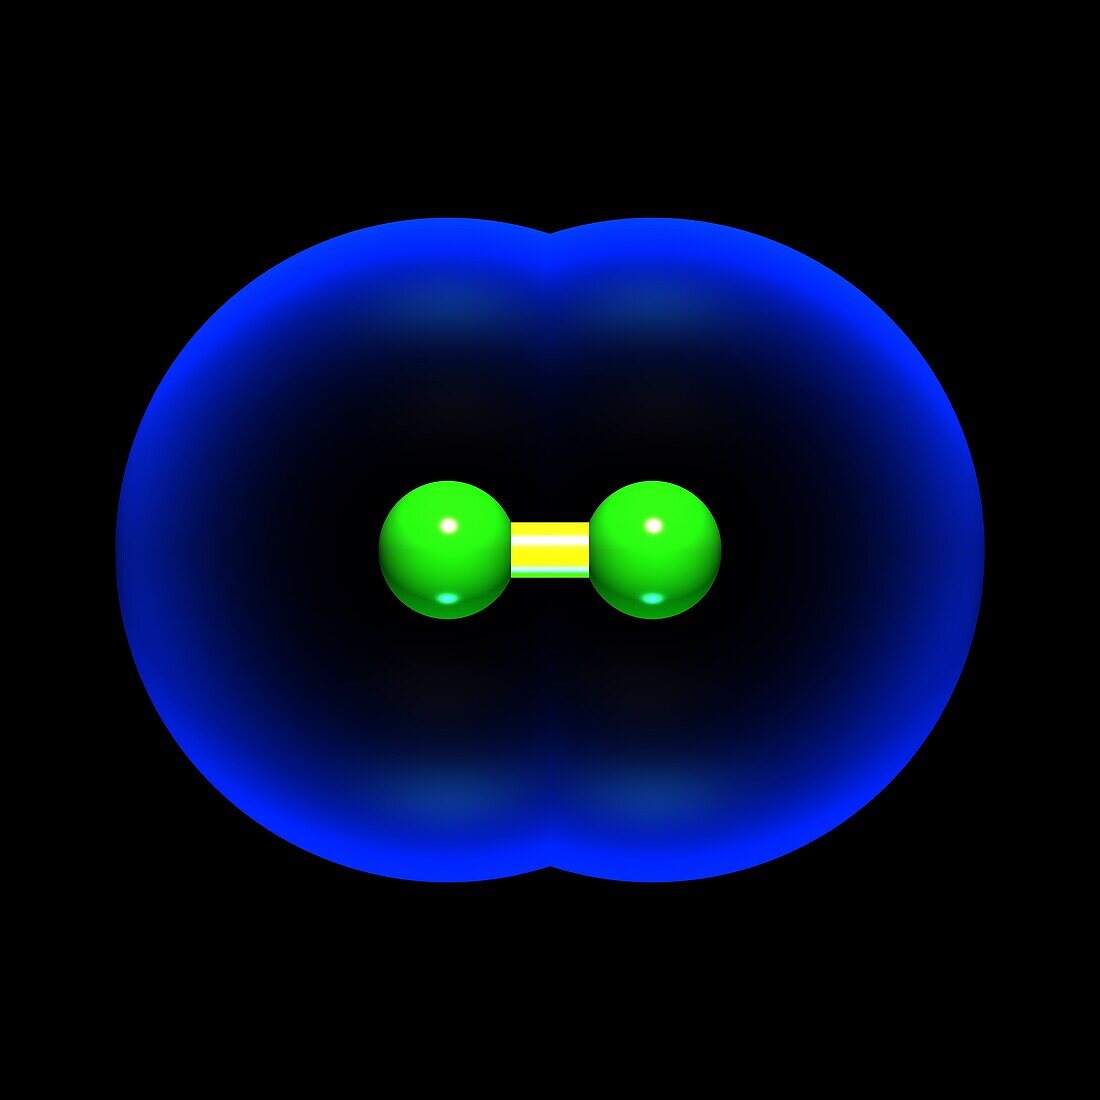 Hydrogen molecule, illustration